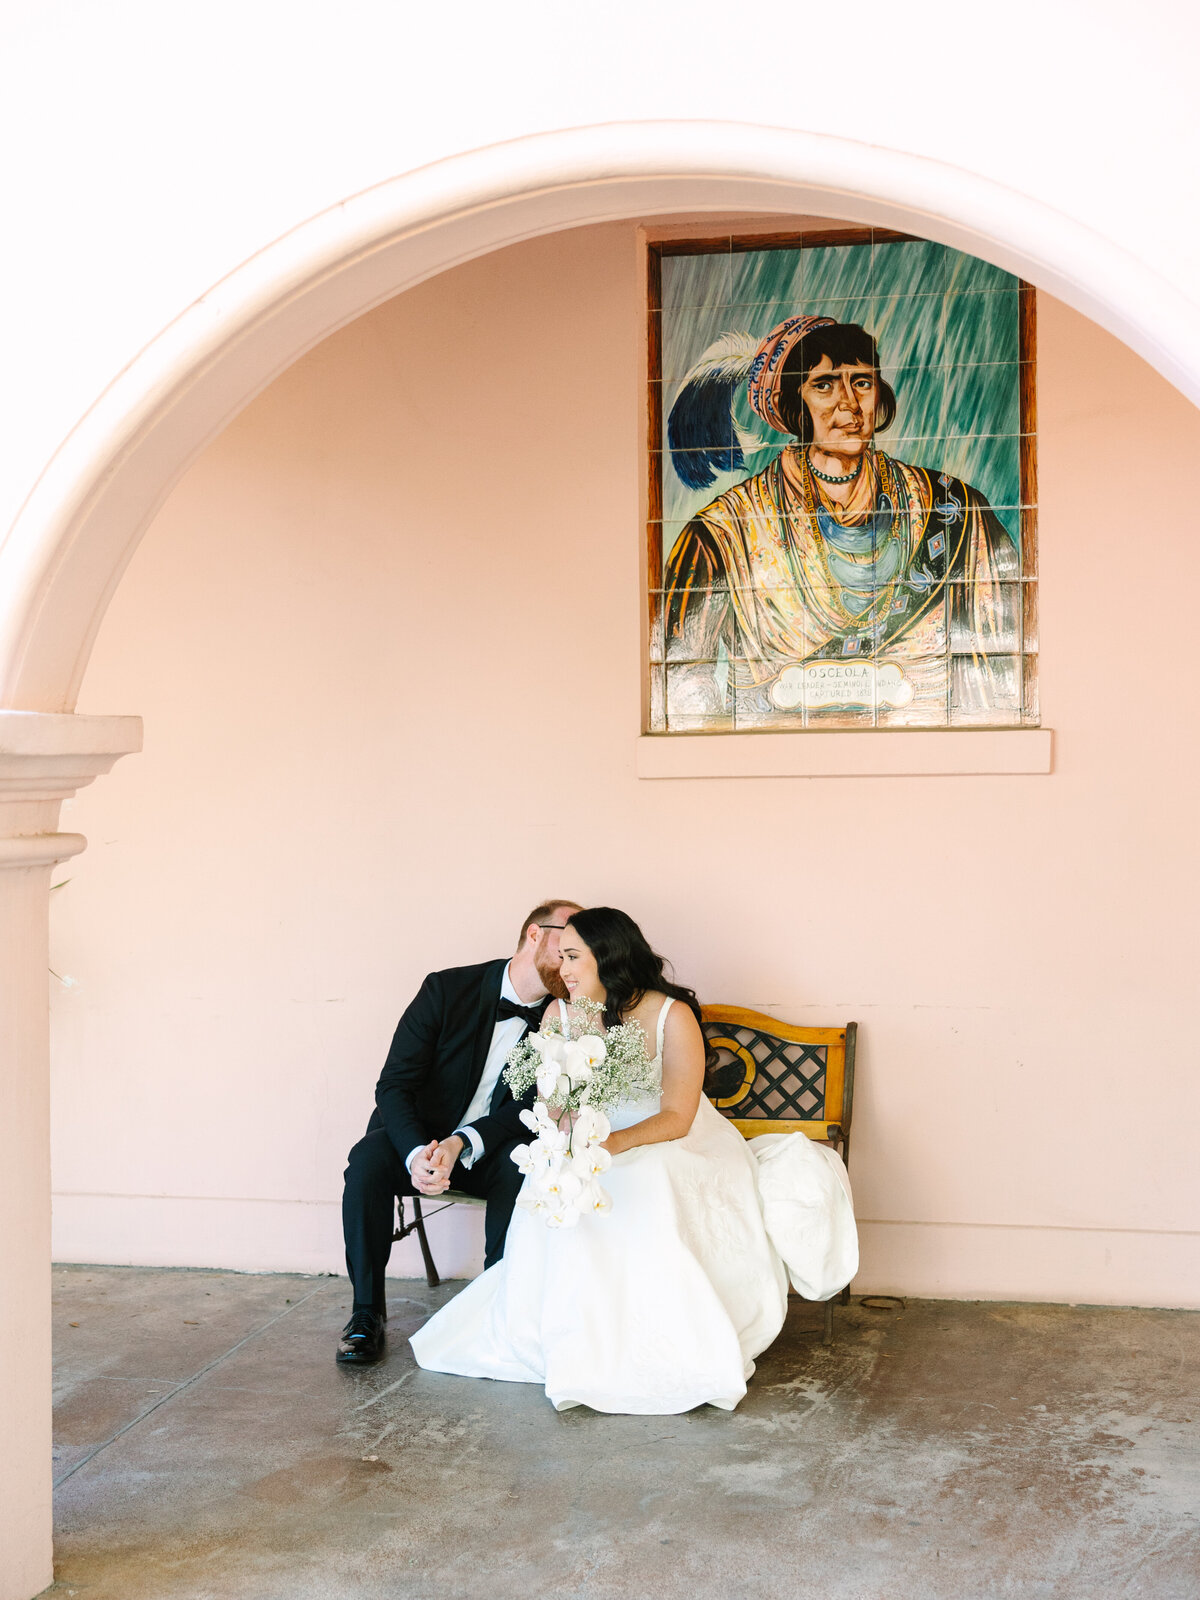 LAURA PEREZ PHOTOGRAPHY LLC Alejandra & michael Oldest house and 9 aviles st augustine weddings-46